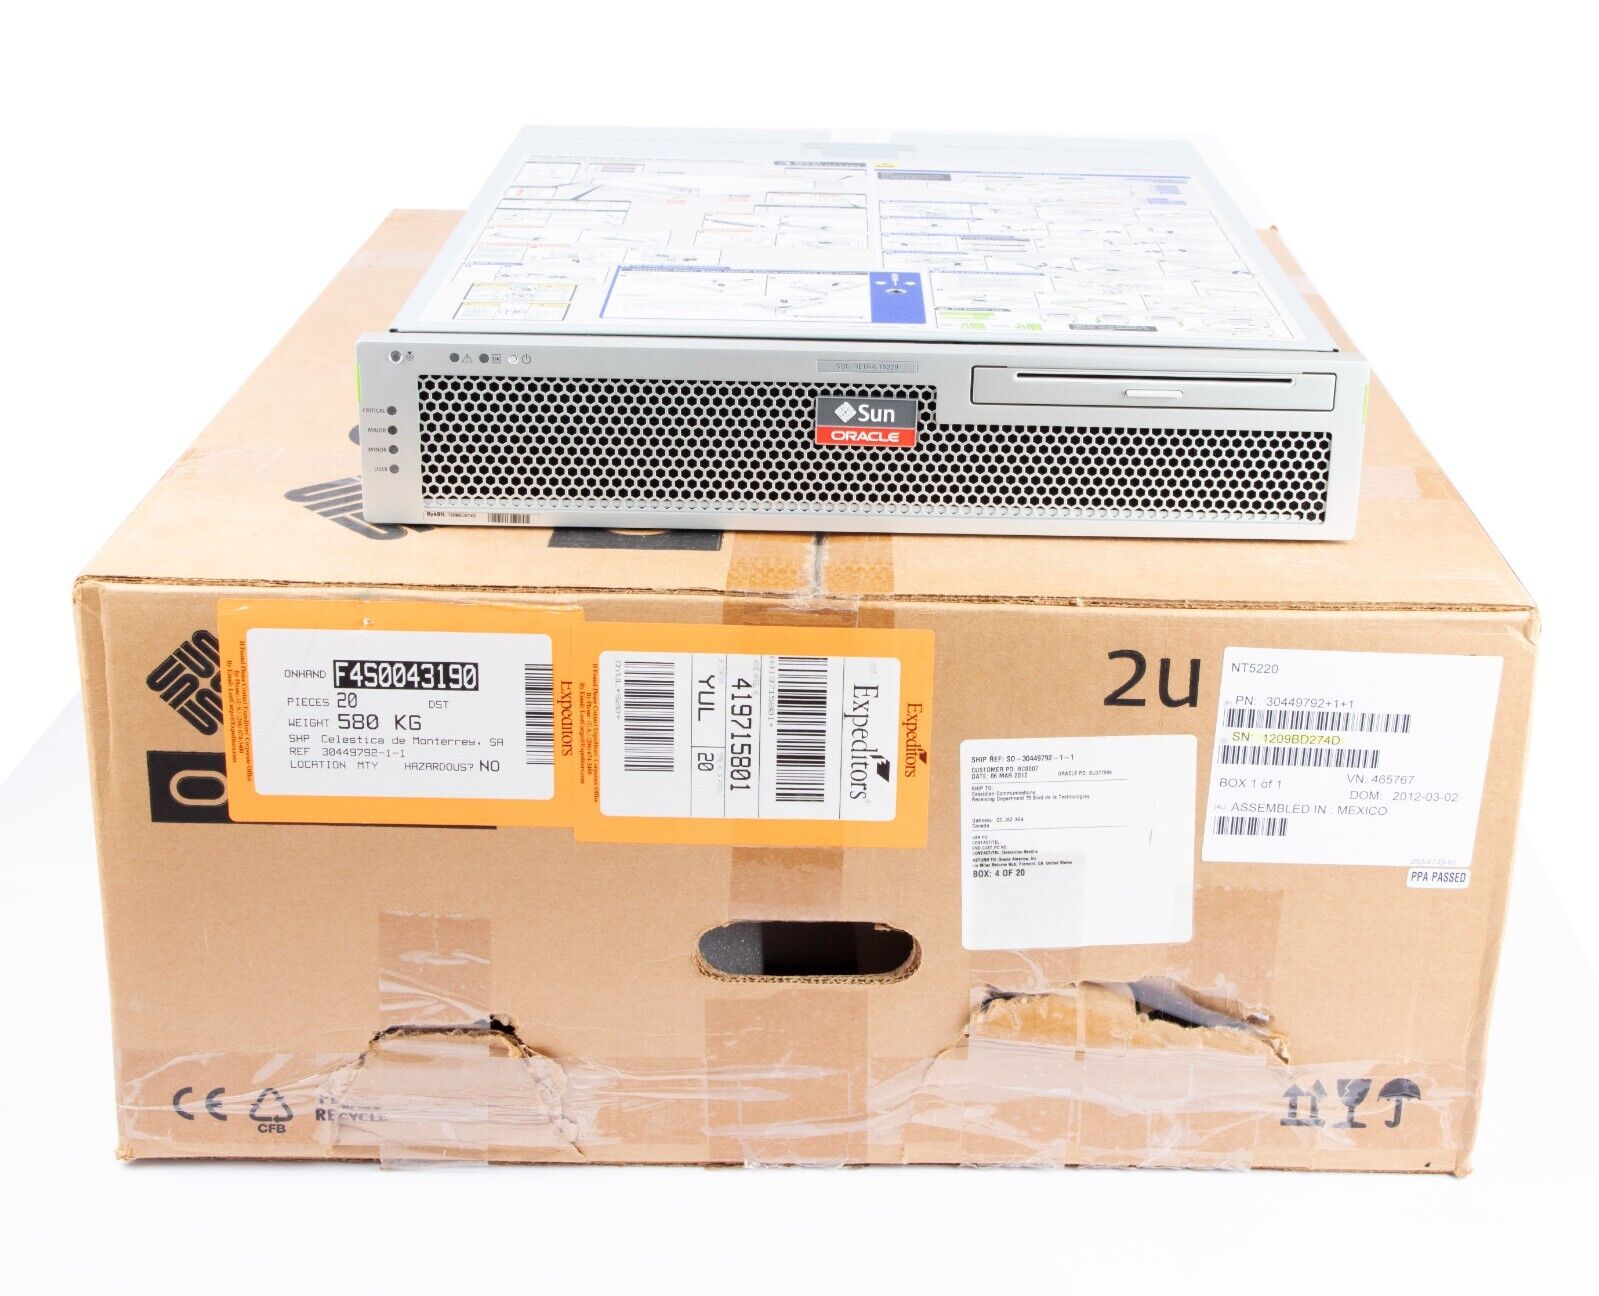 NEW Sun Netra T5220 SPARC Enterprise Server, 1.2GHz, 4-Core, 8GB RAM, 2PS, 2 HDD